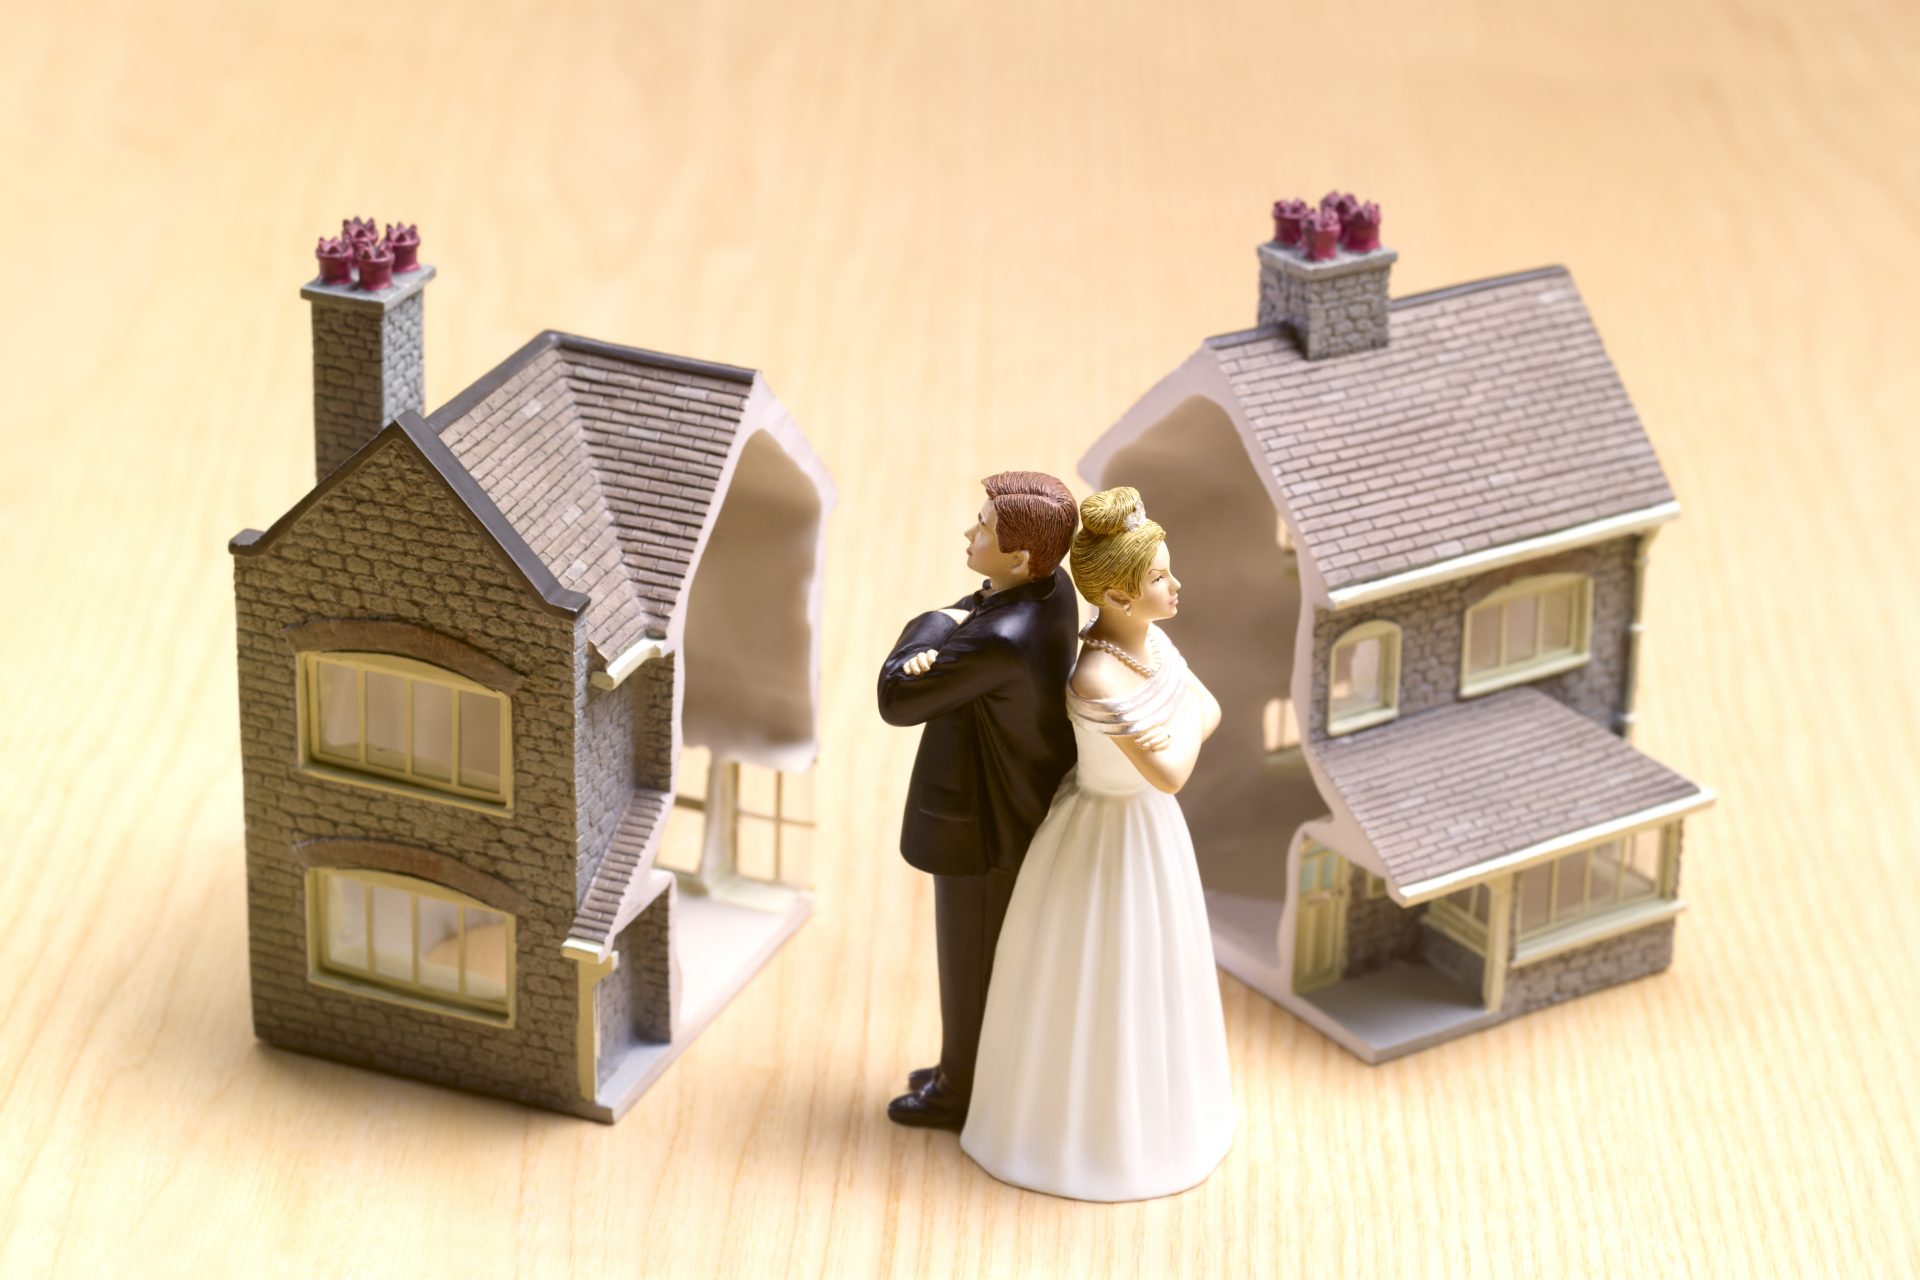 Policies like no-fault divorce